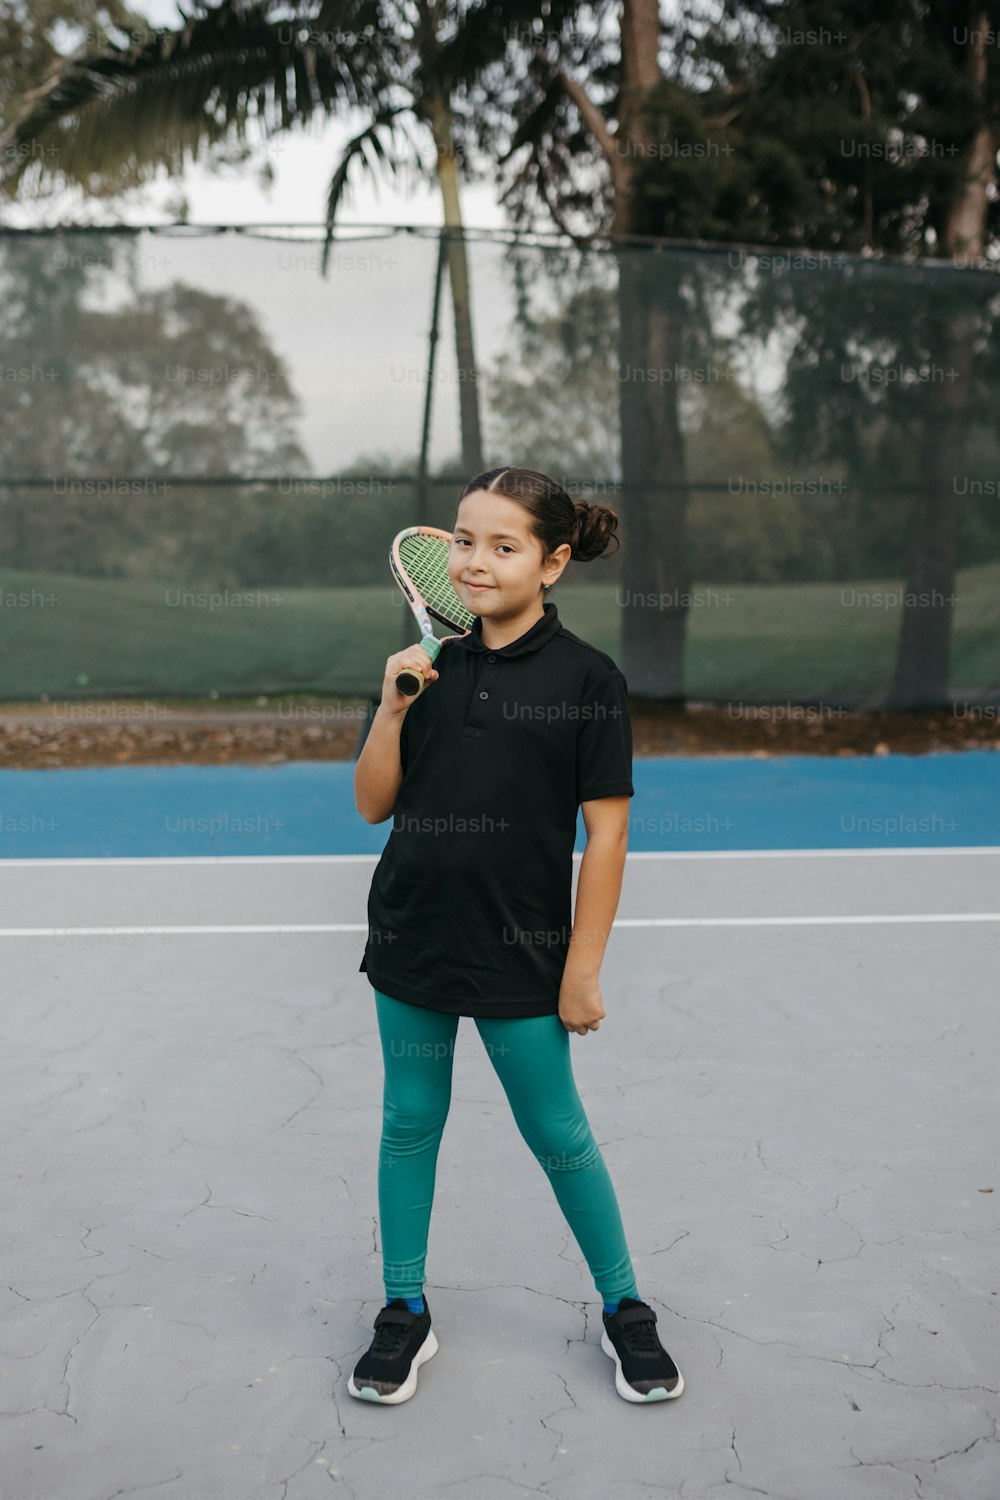 a young girl holding a tennis racquet on a tennis court